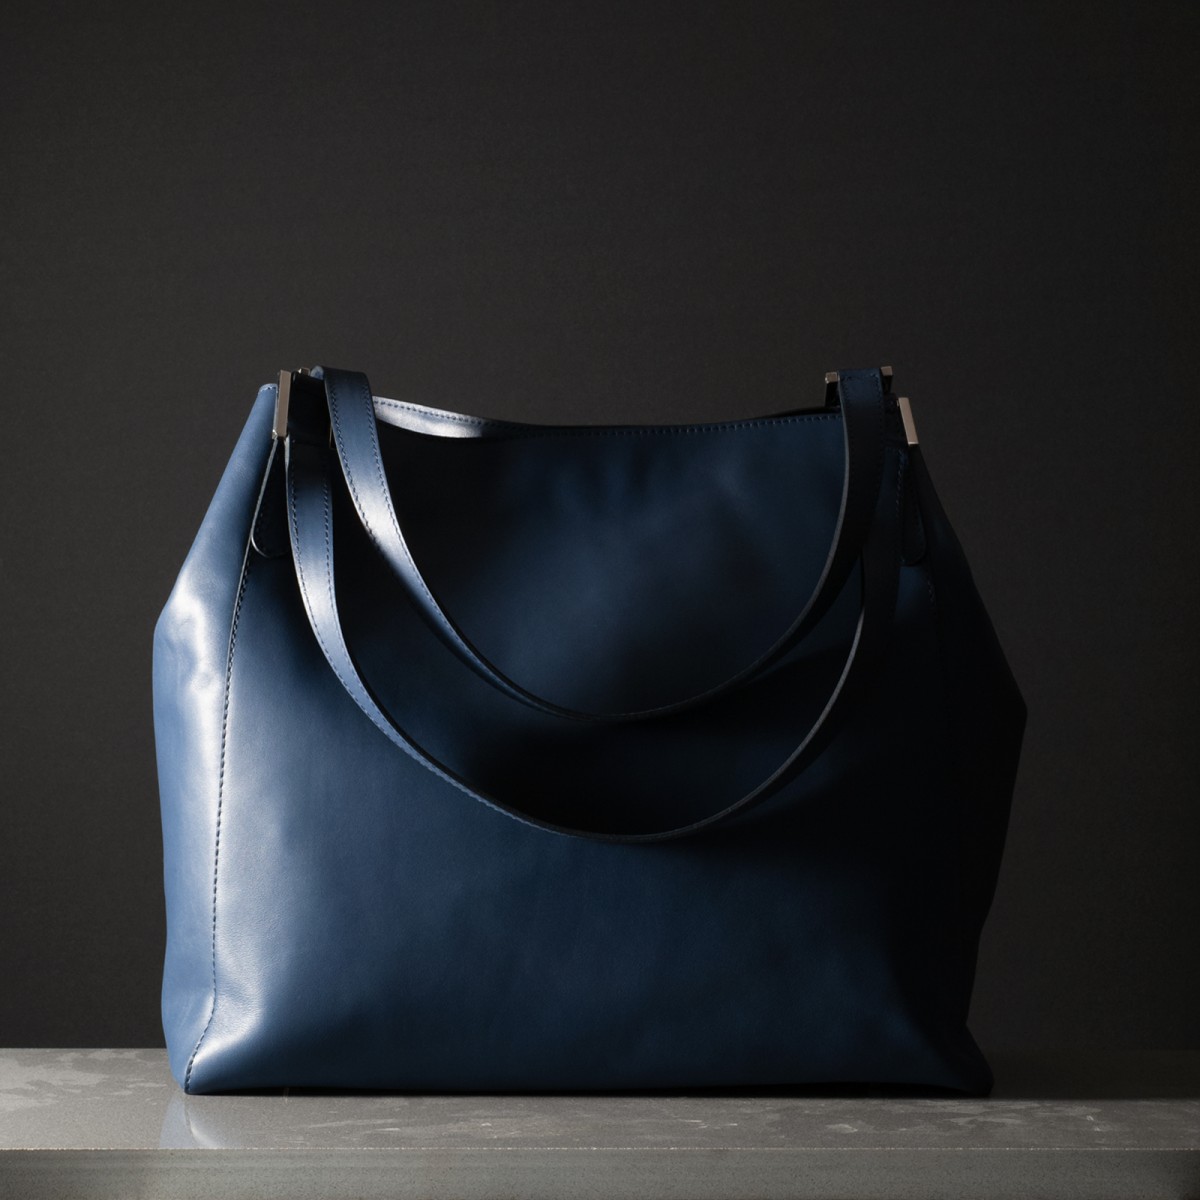 GINA - Calfskin leather bag, handmade in Italy